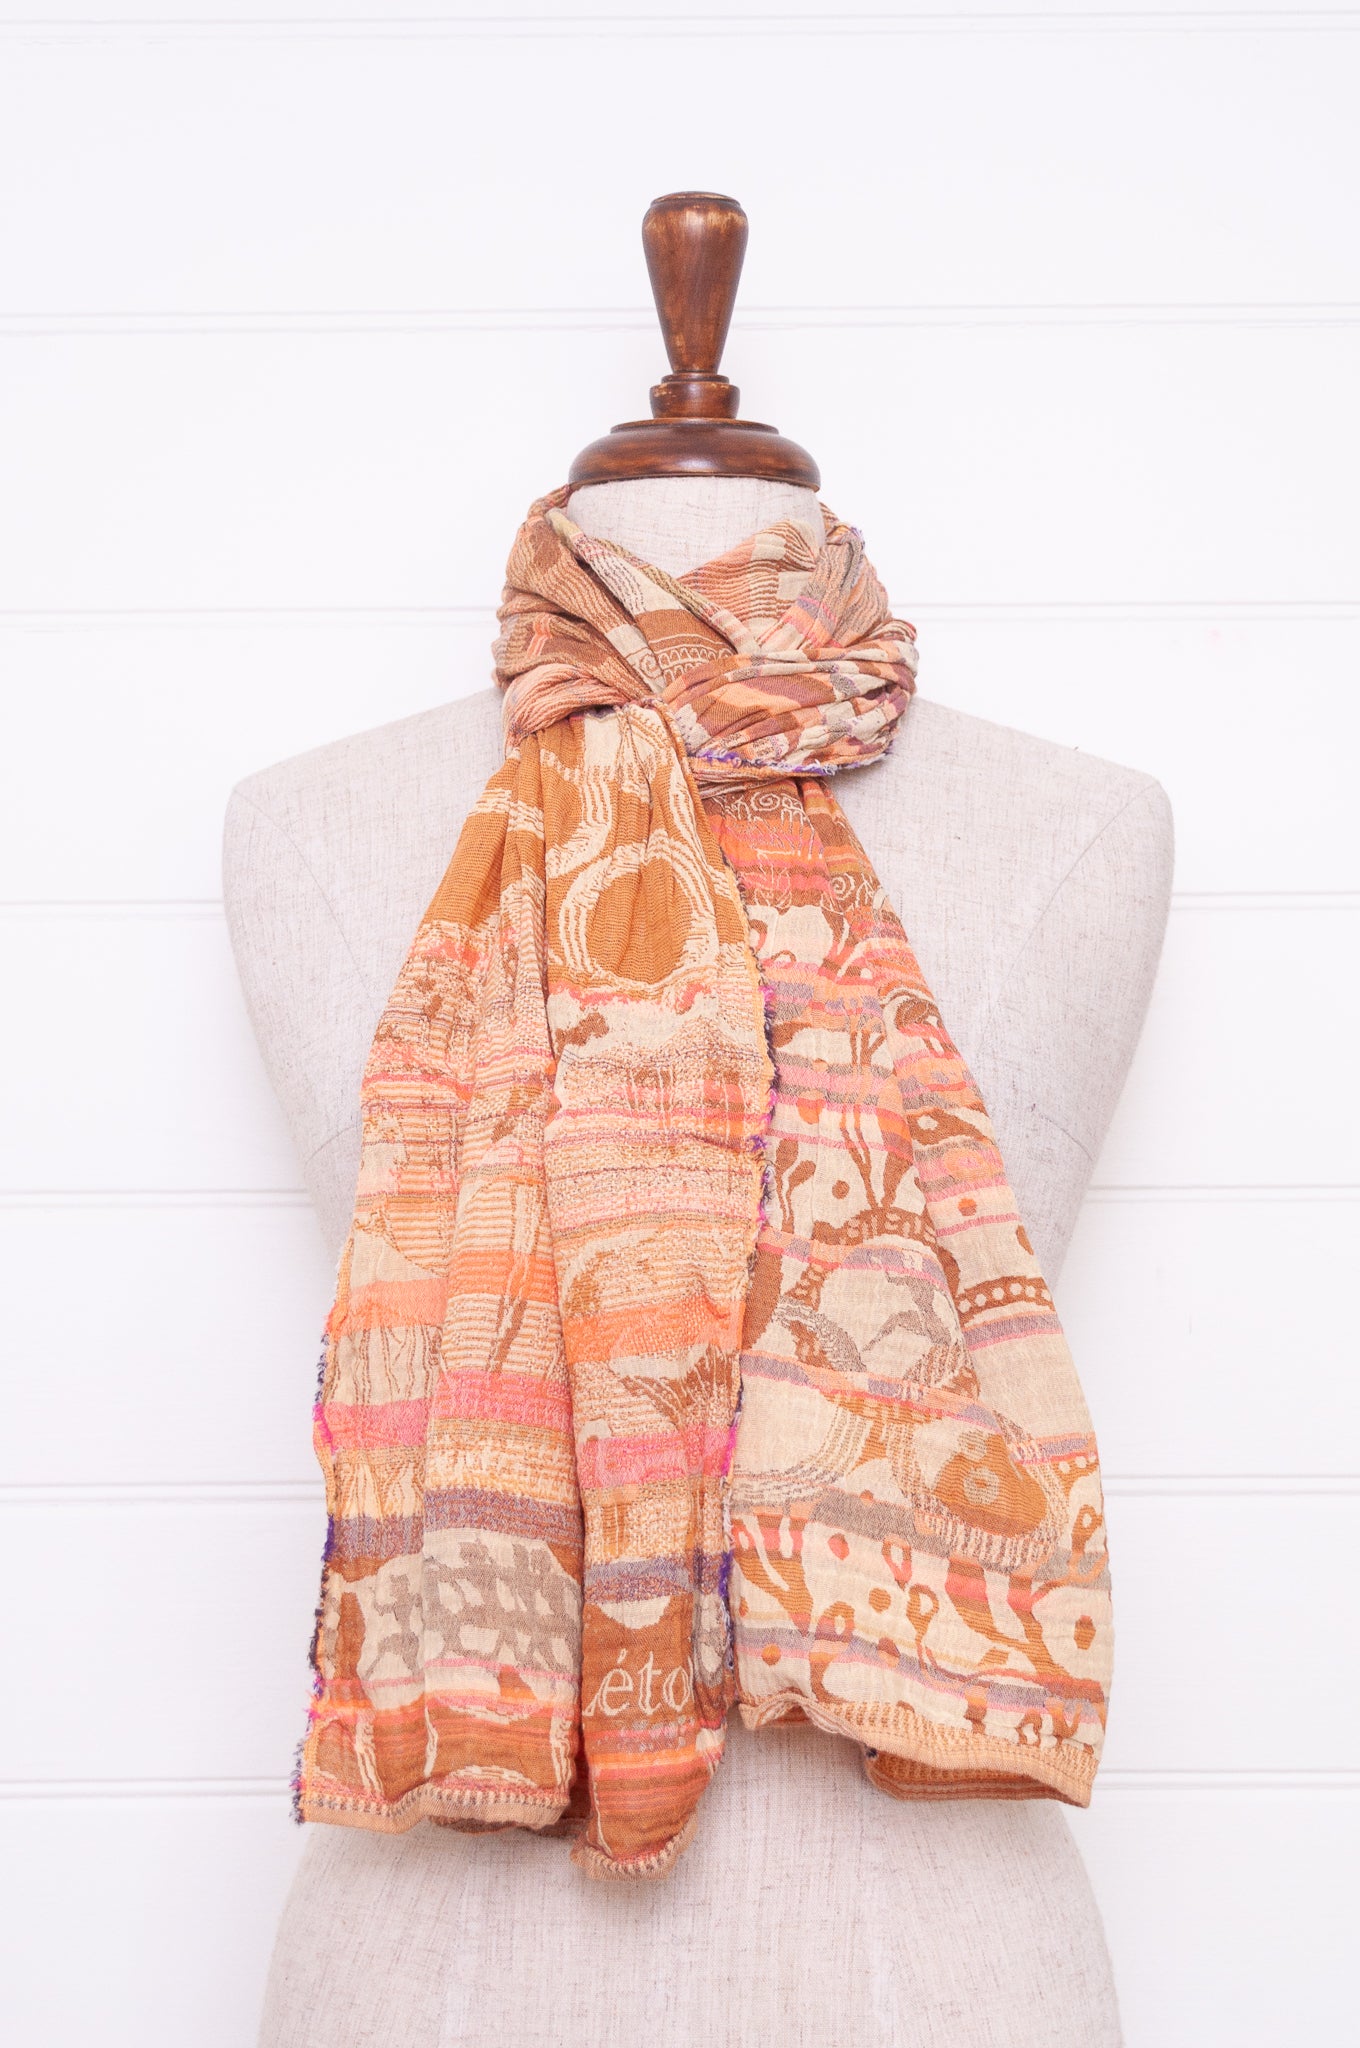 Letol made in France organic cotton jacquard  weave scarf, Olympe design in rose des sables, desert rose.